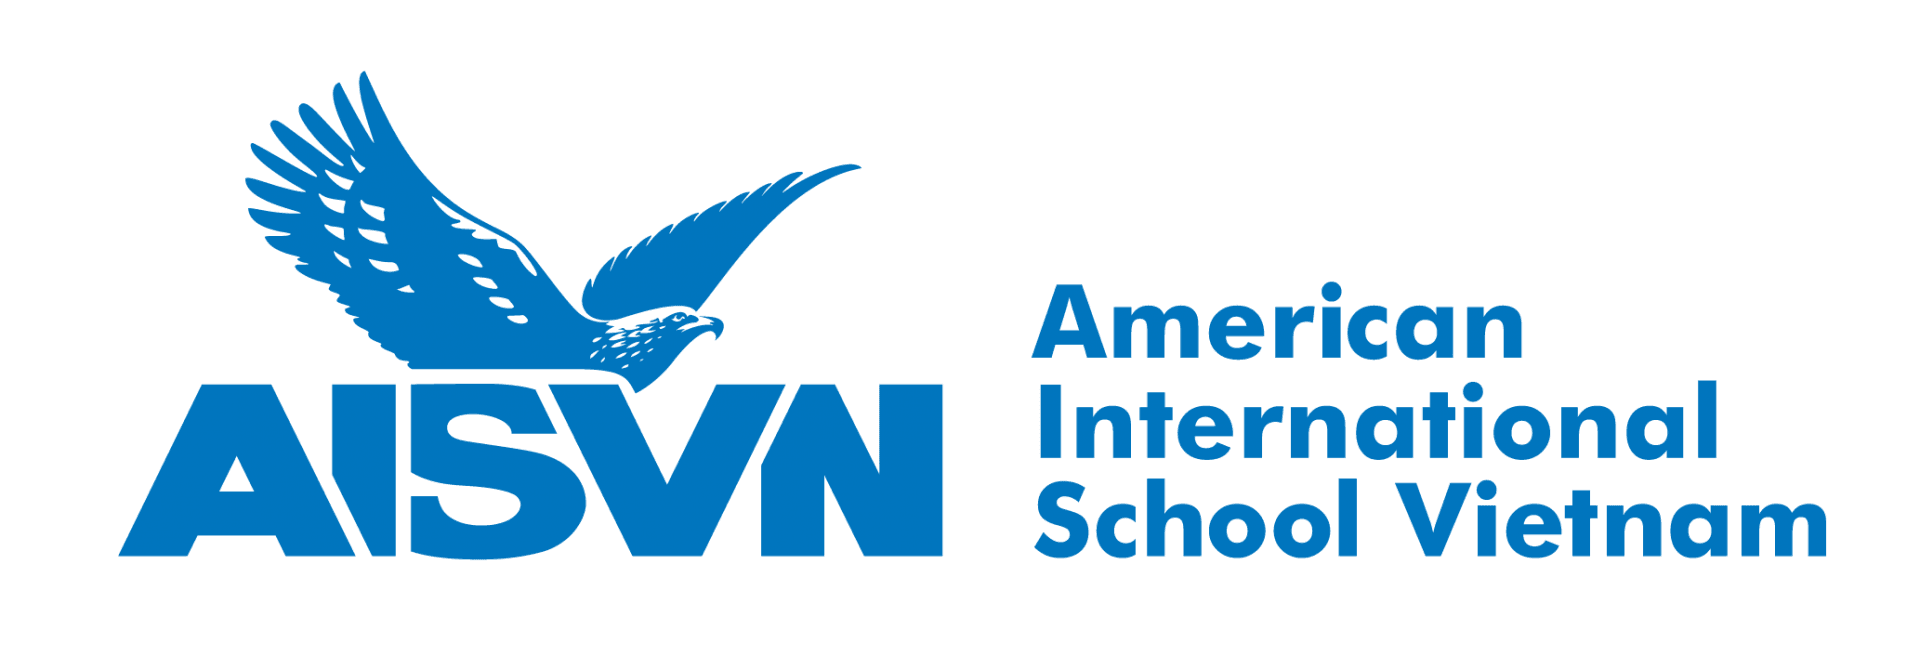 AW_AISVN-Logo-Amendment_20200519-01